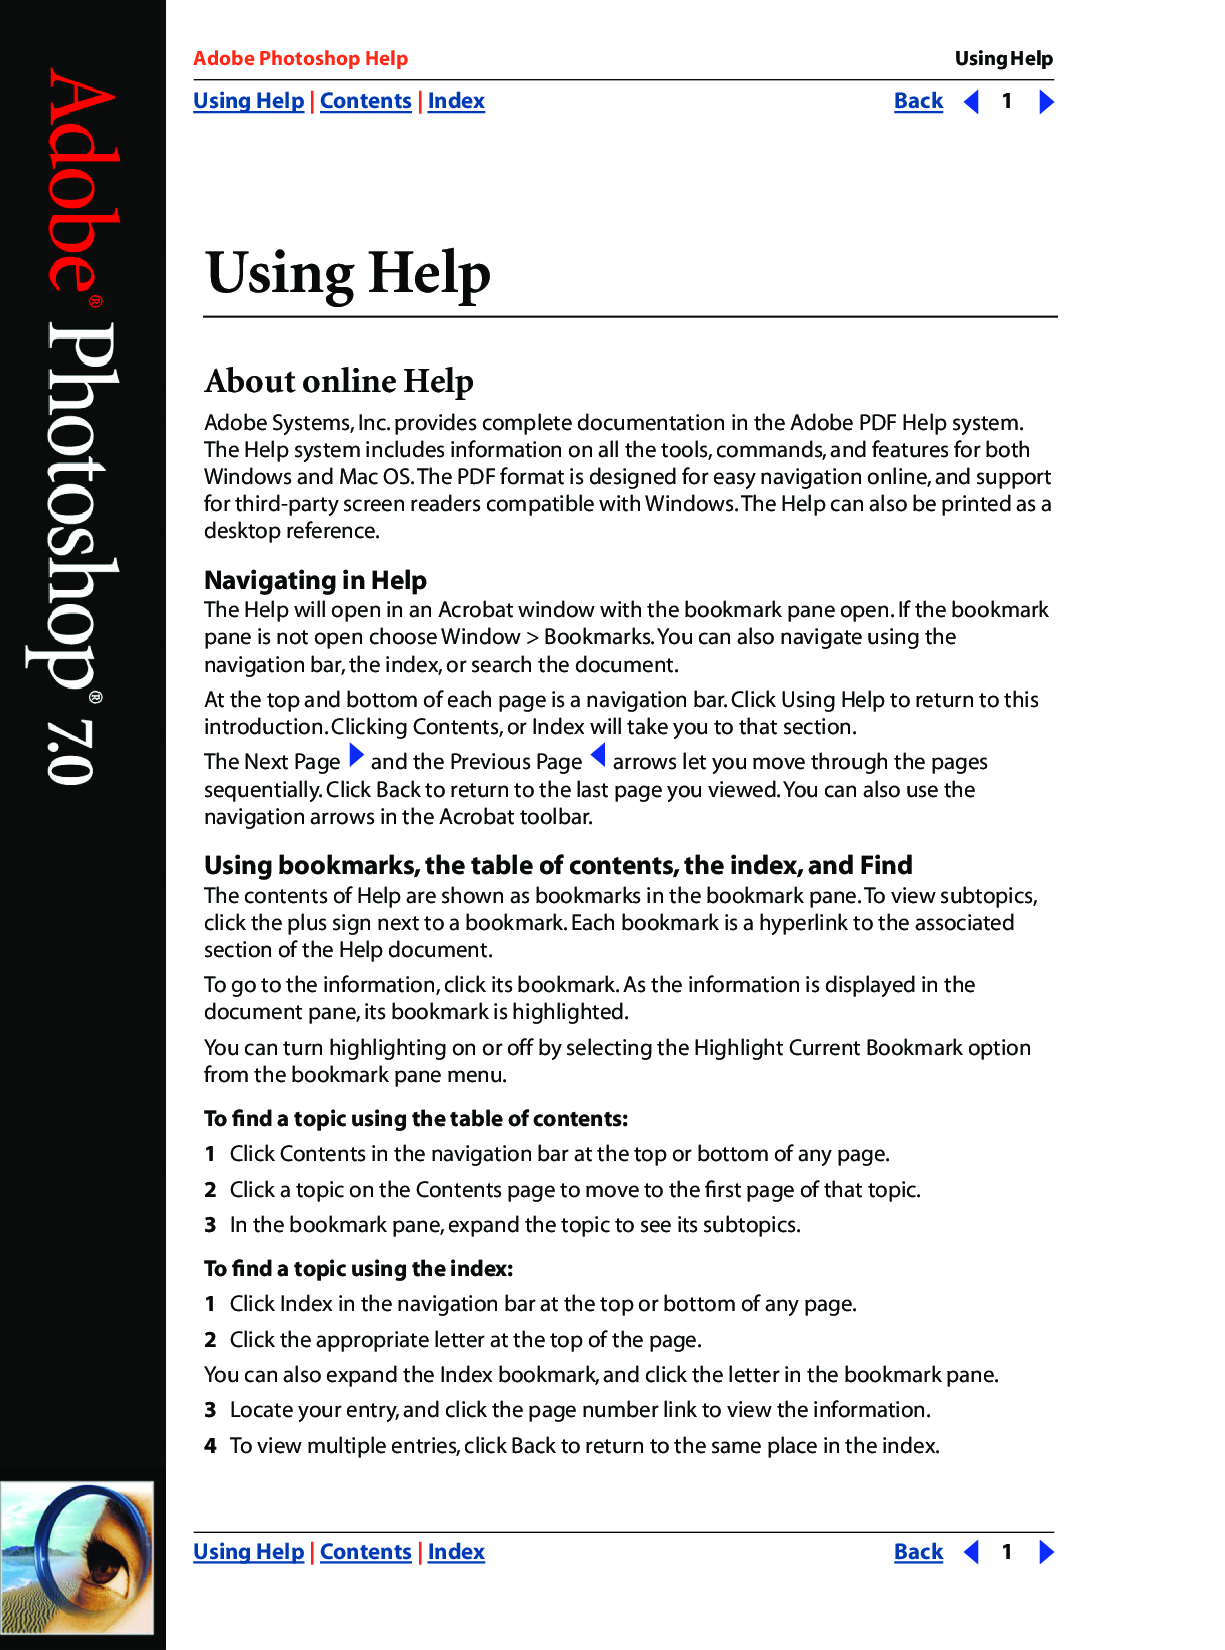 adobe photoshop 7.0 user guide pdf free download